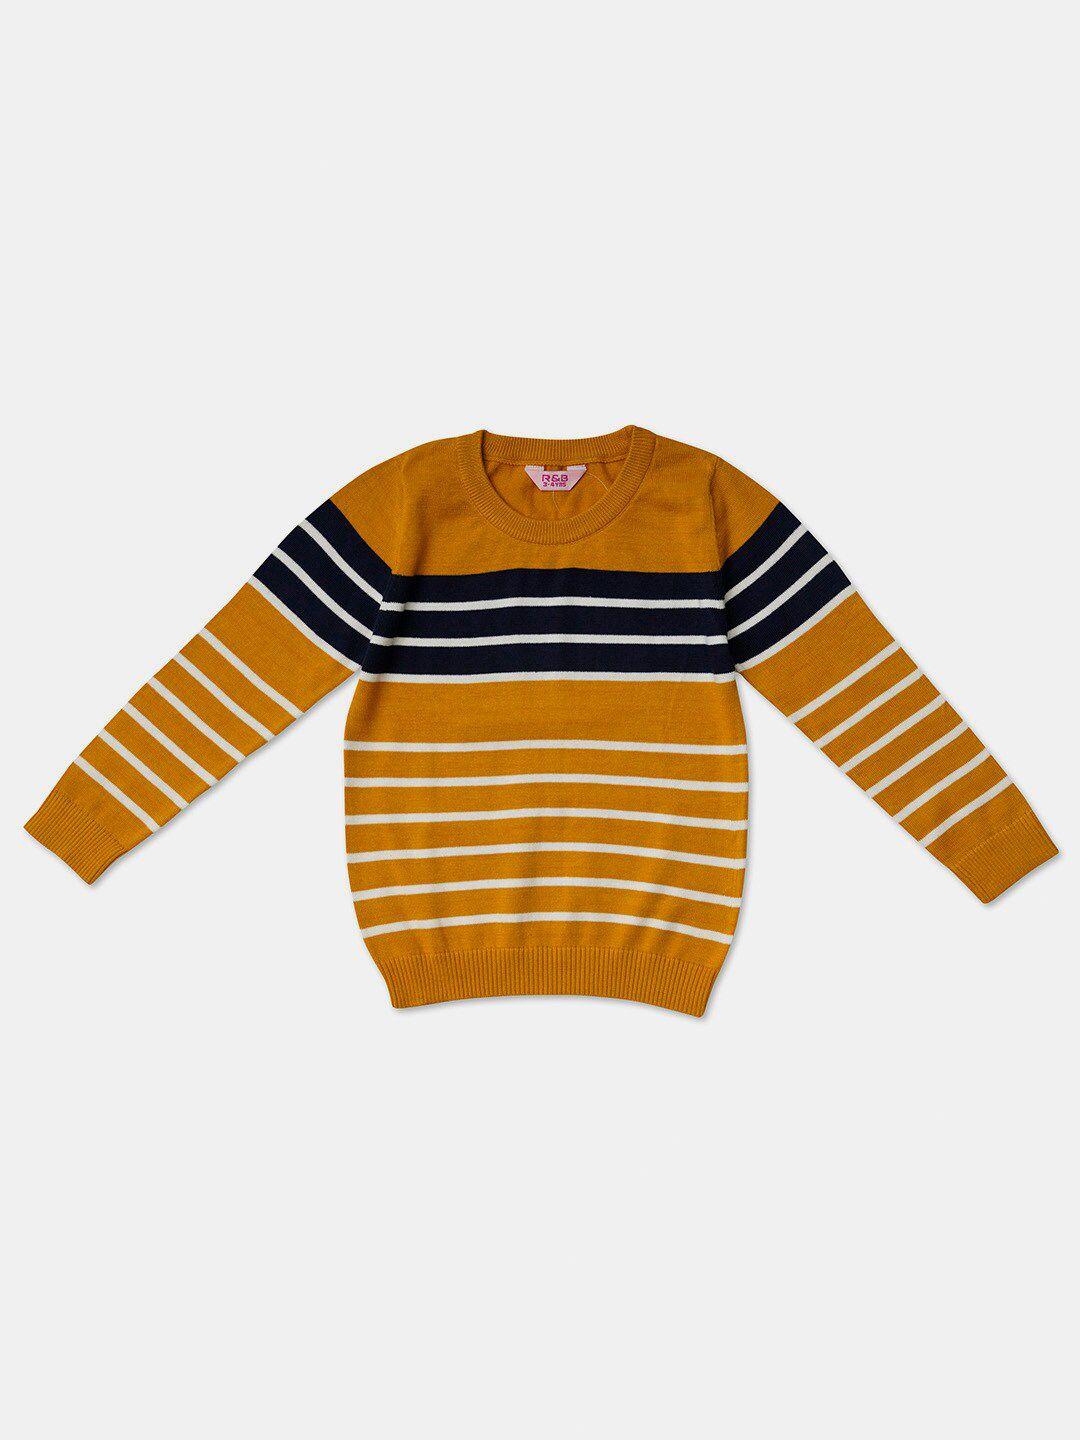 r&b boys yellow & black striped pullover